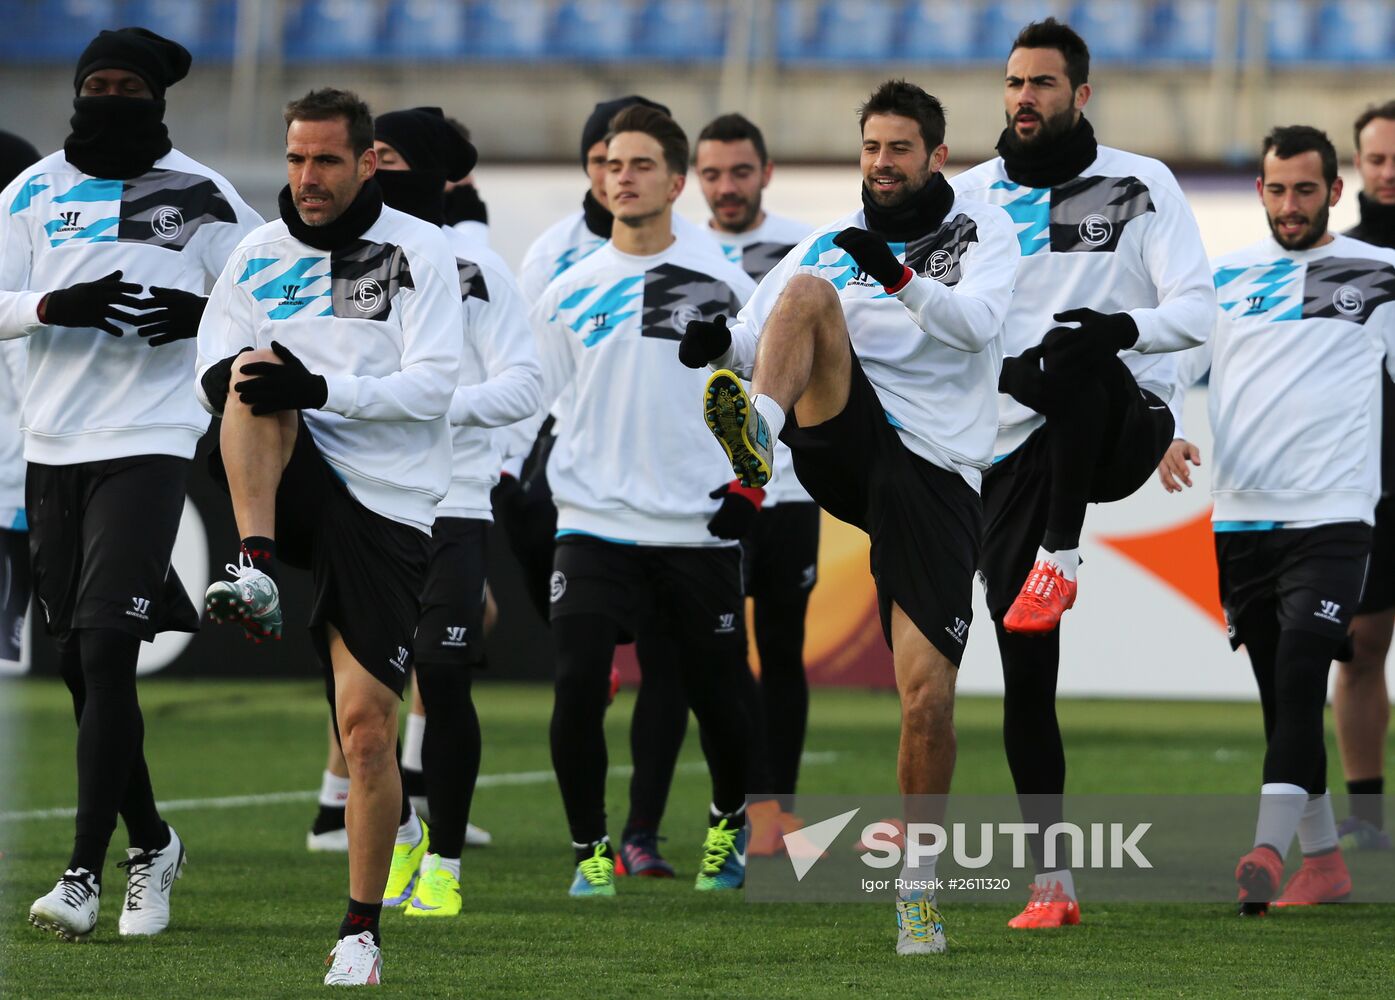 UEFA Europa League. FC Sevilla holds training session